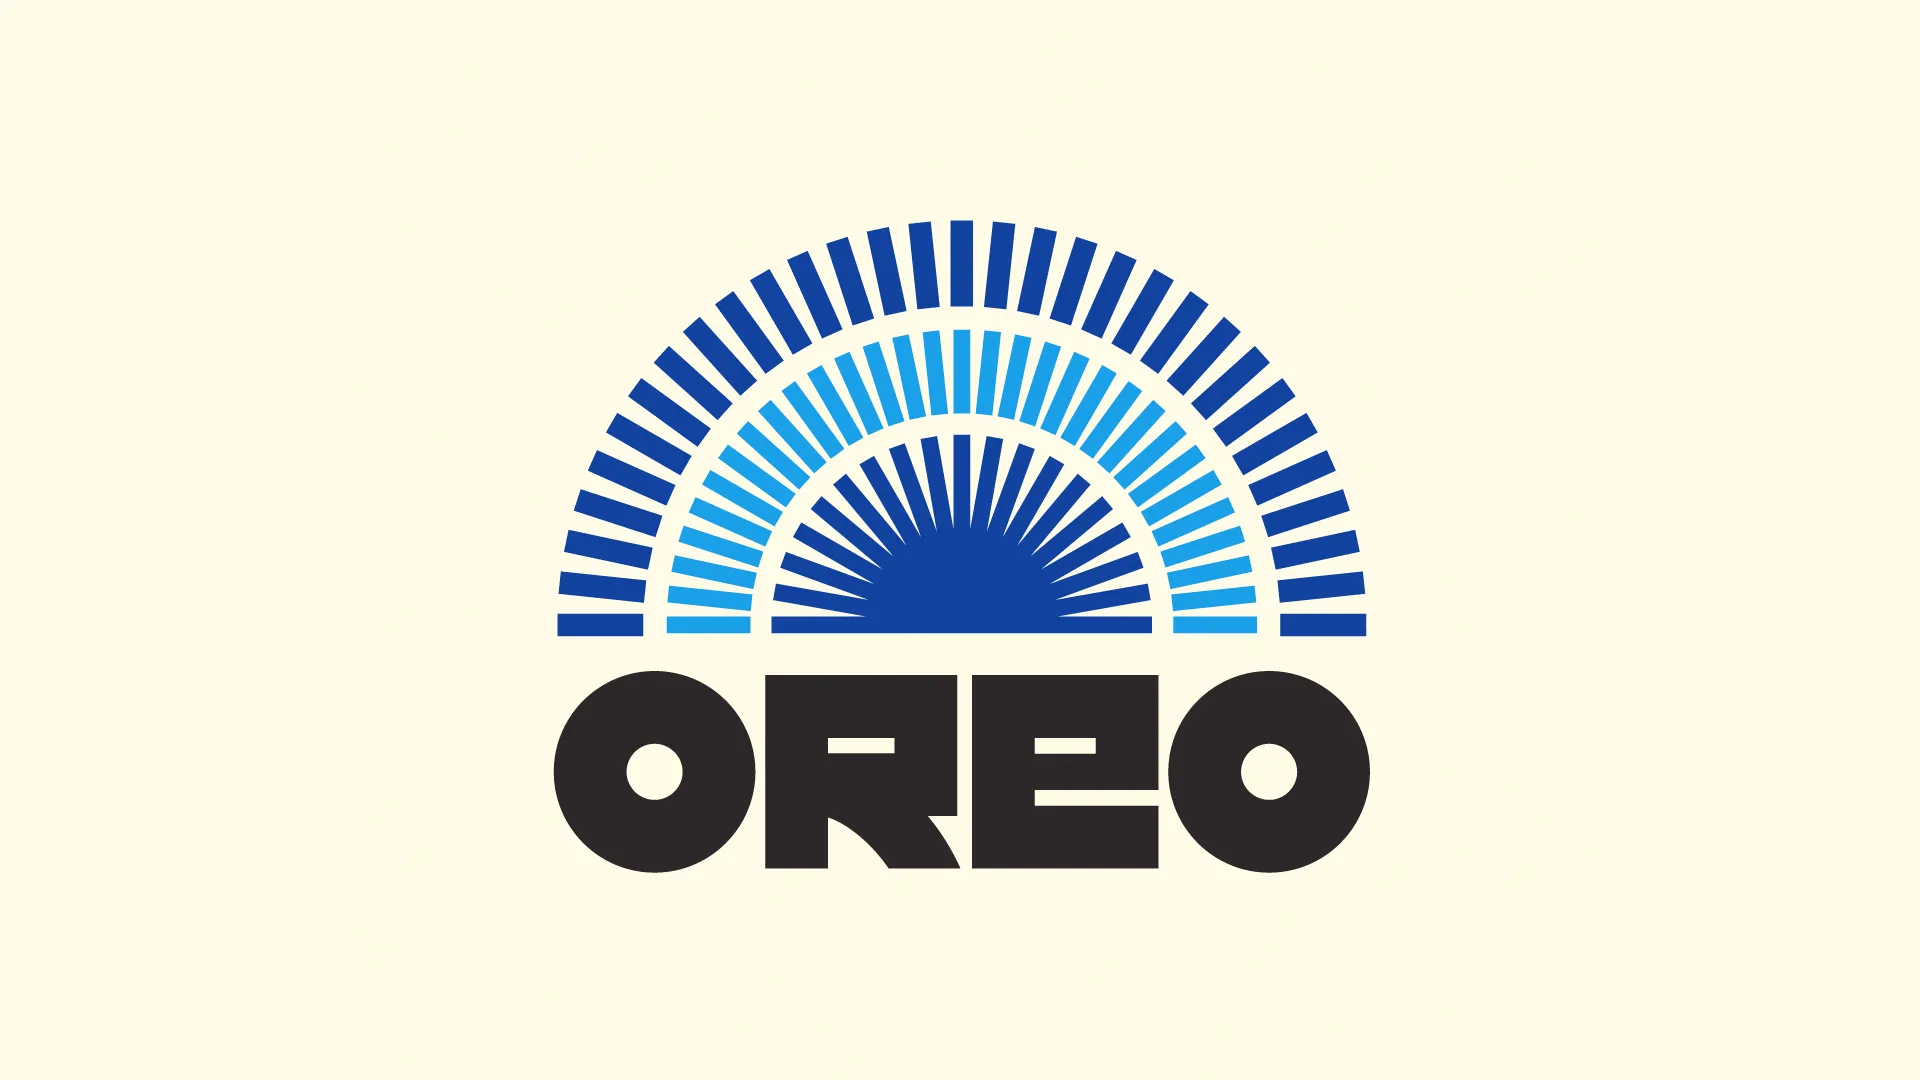 oreo reimagined as a vintage logo design